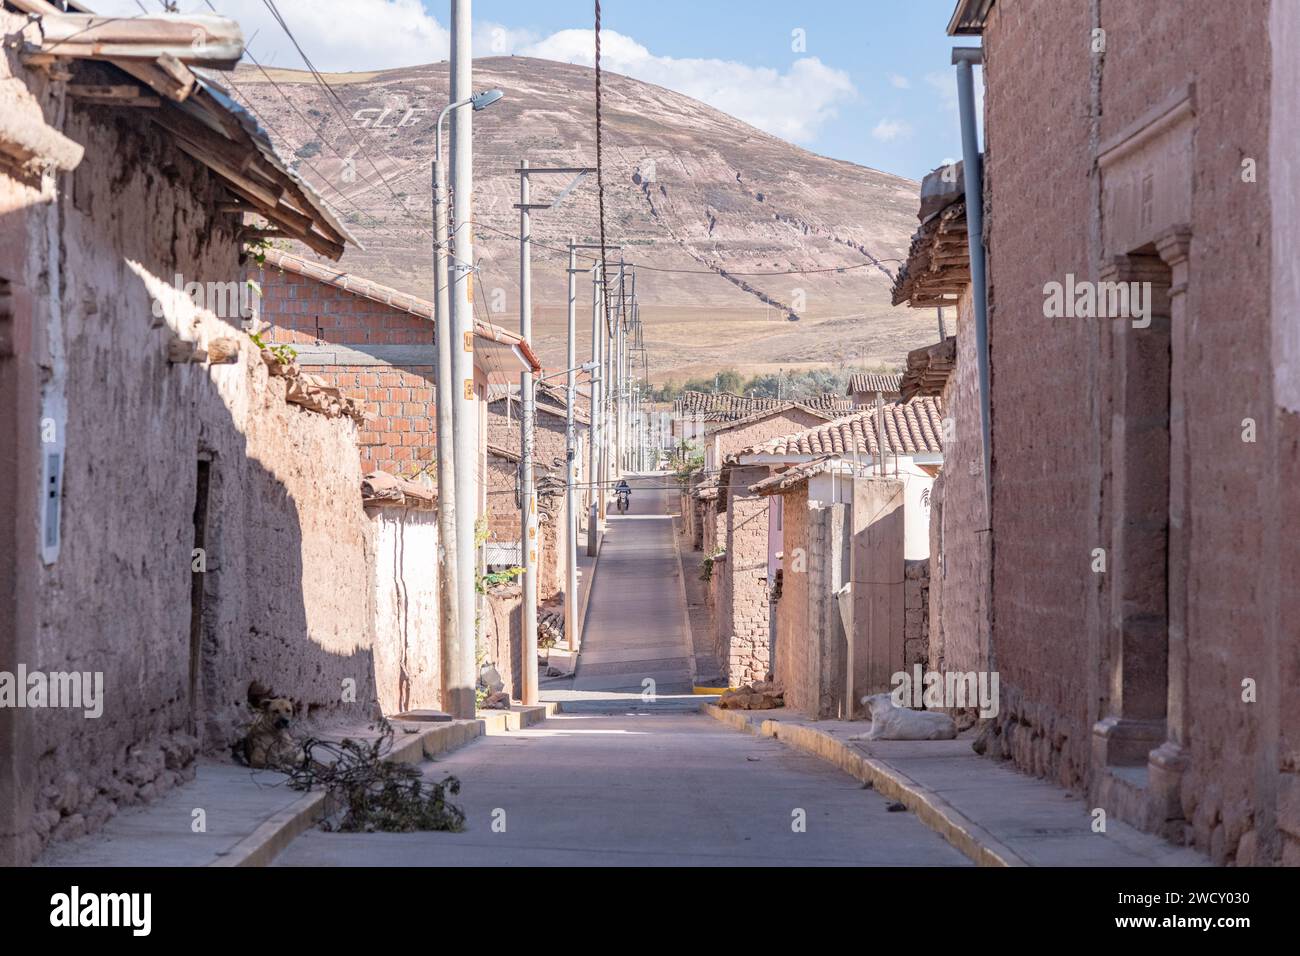 A street / road in Maras village in Peru Stock Photo